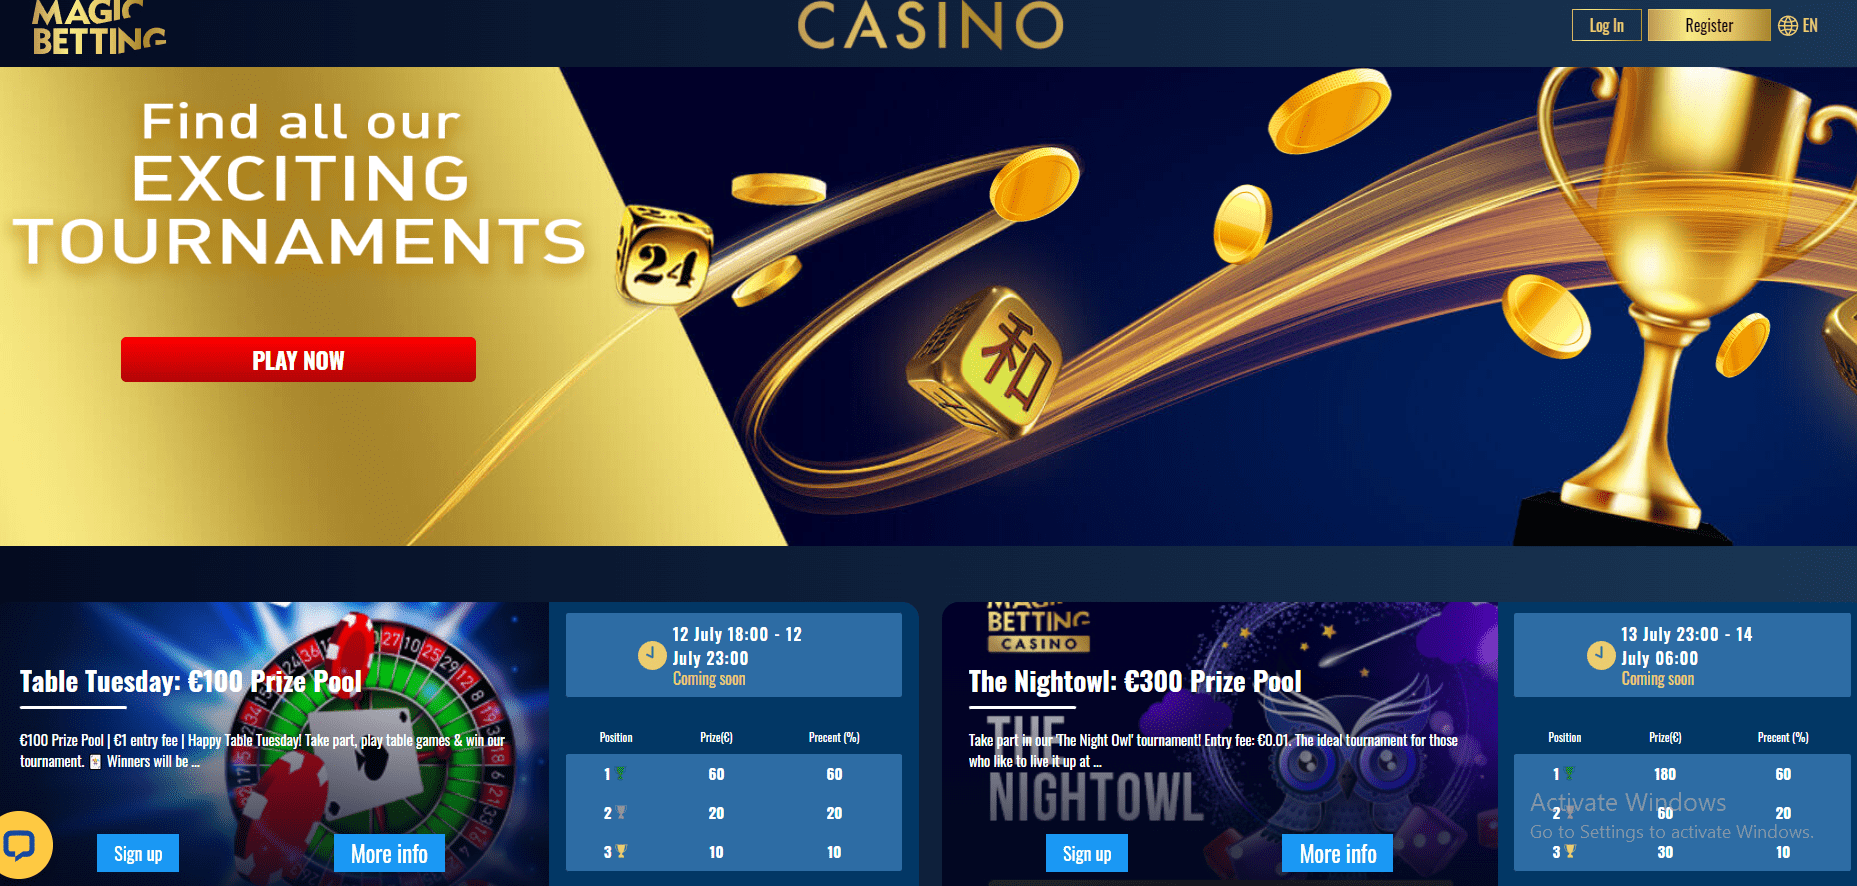 Magic Betting casino tournaments-min